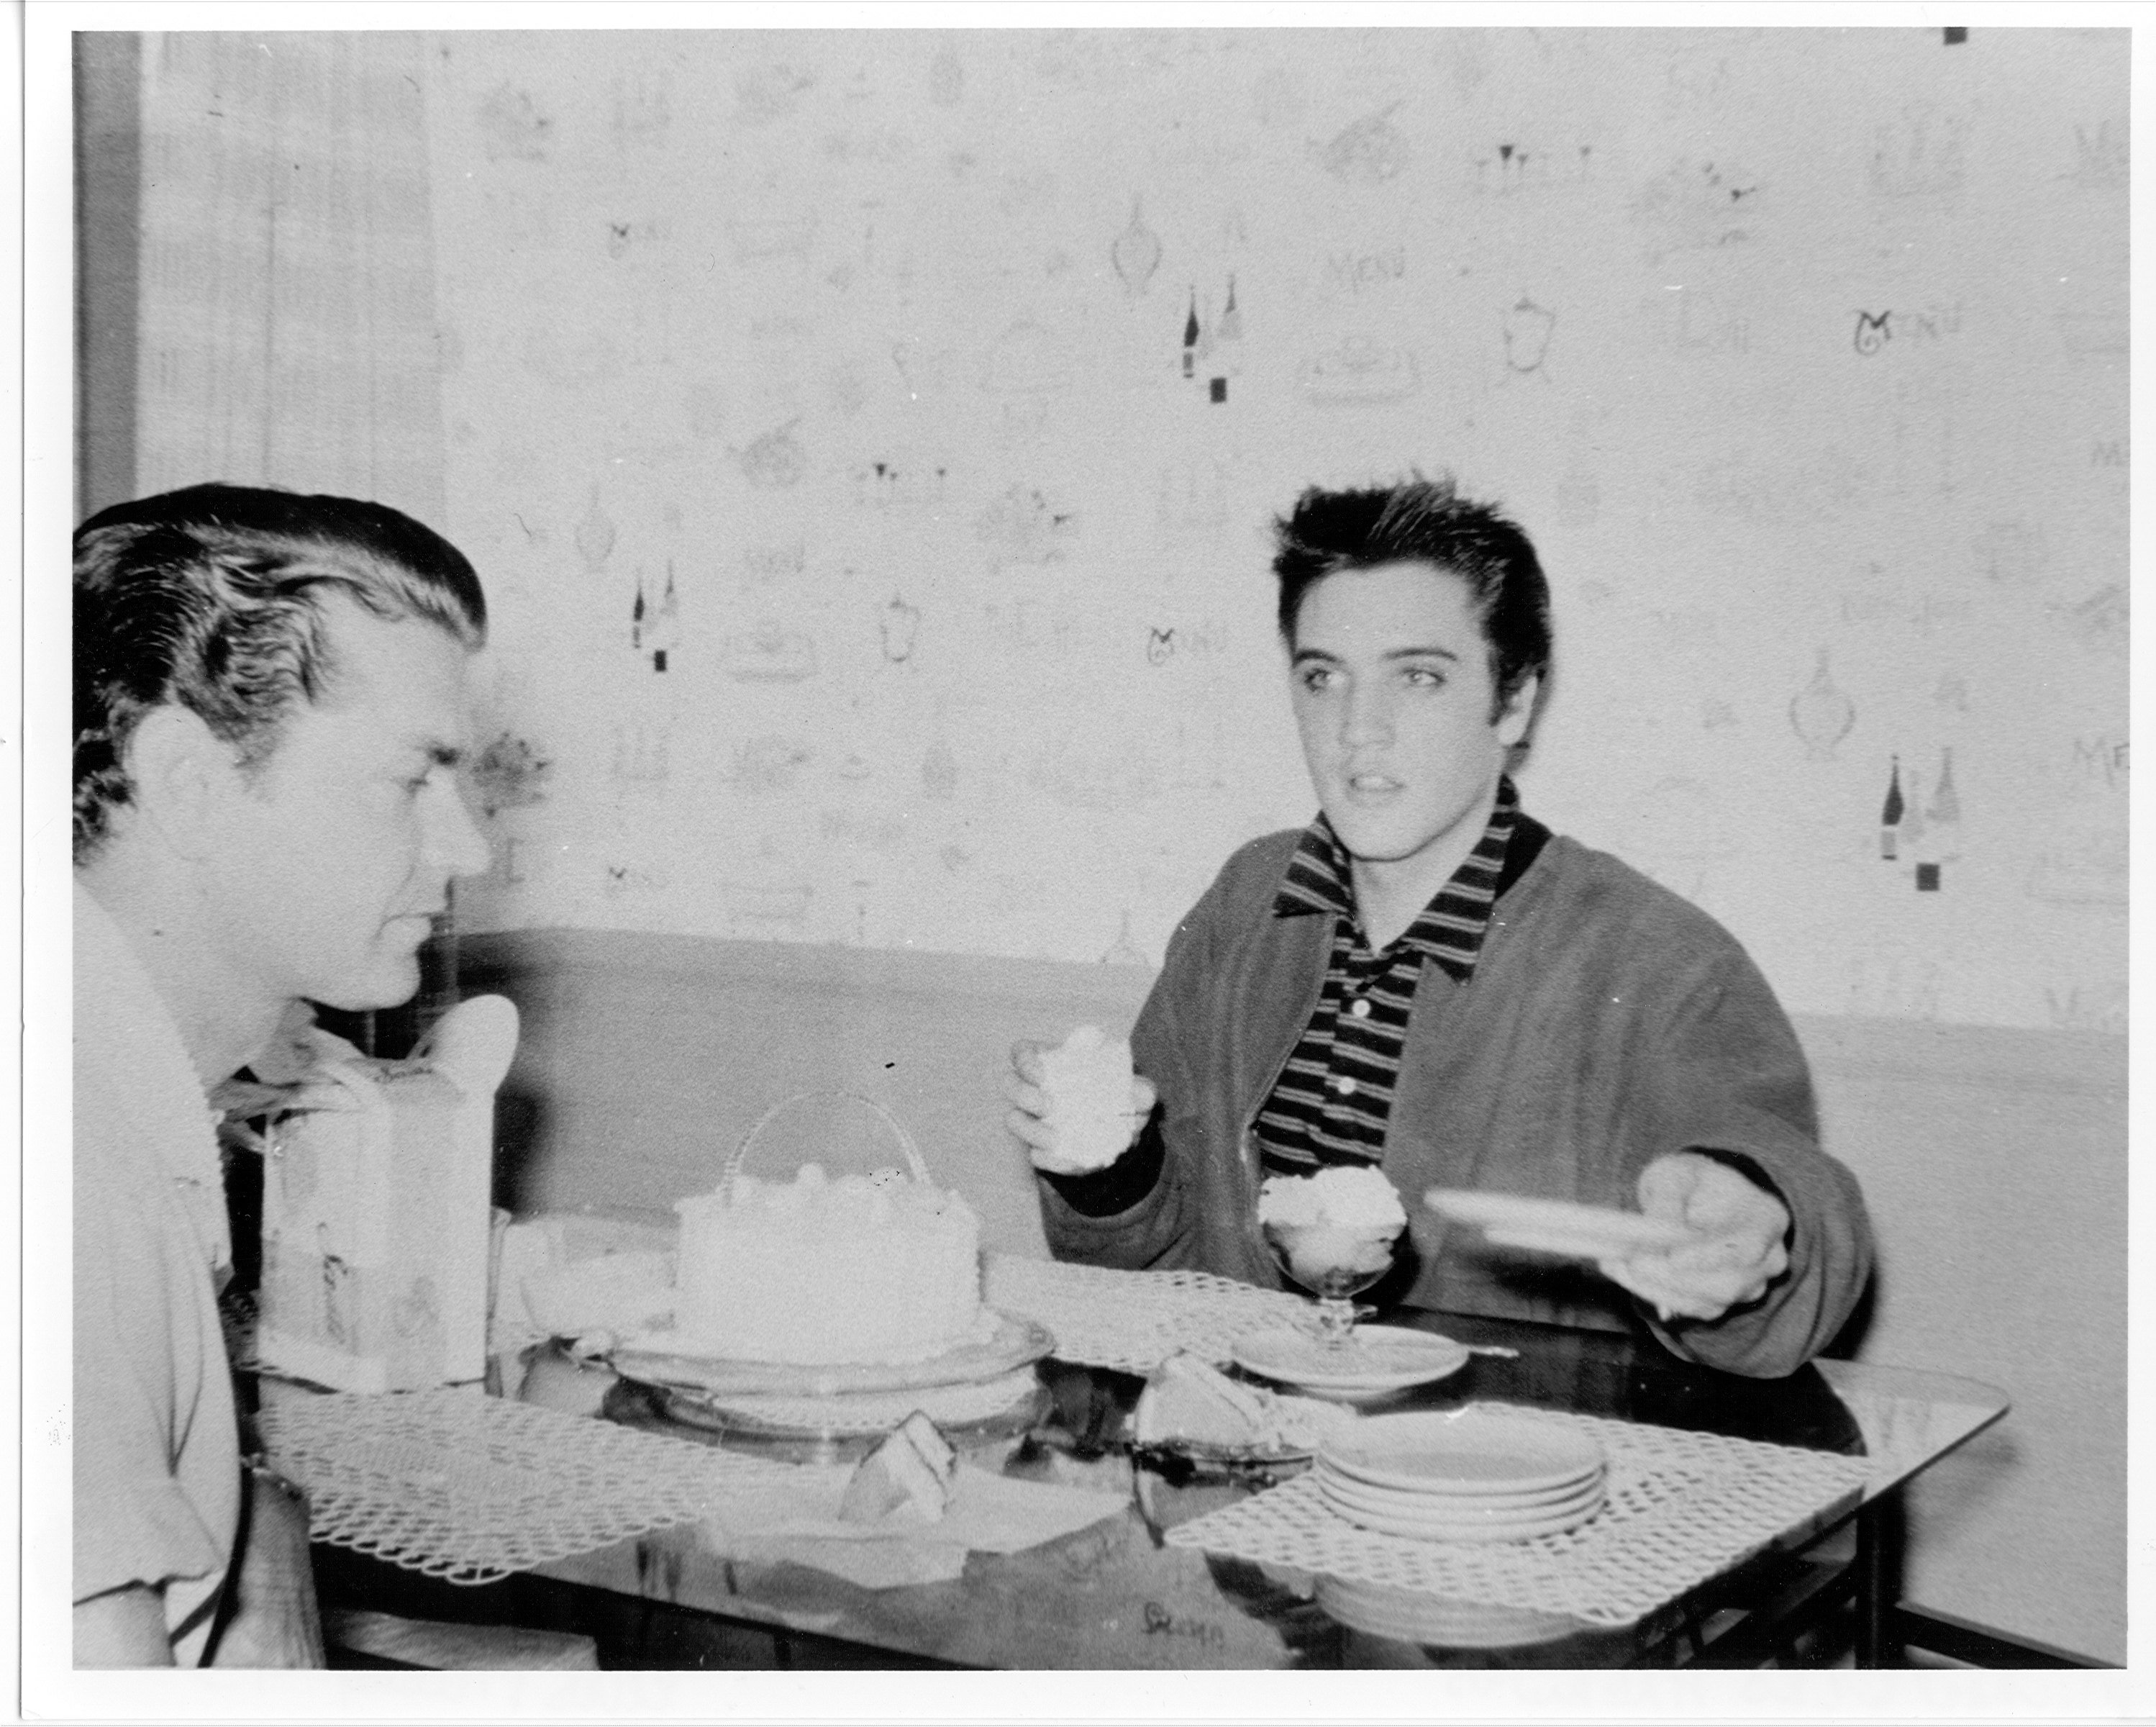 Elvis Presley and Sam Phillips eating ice cream